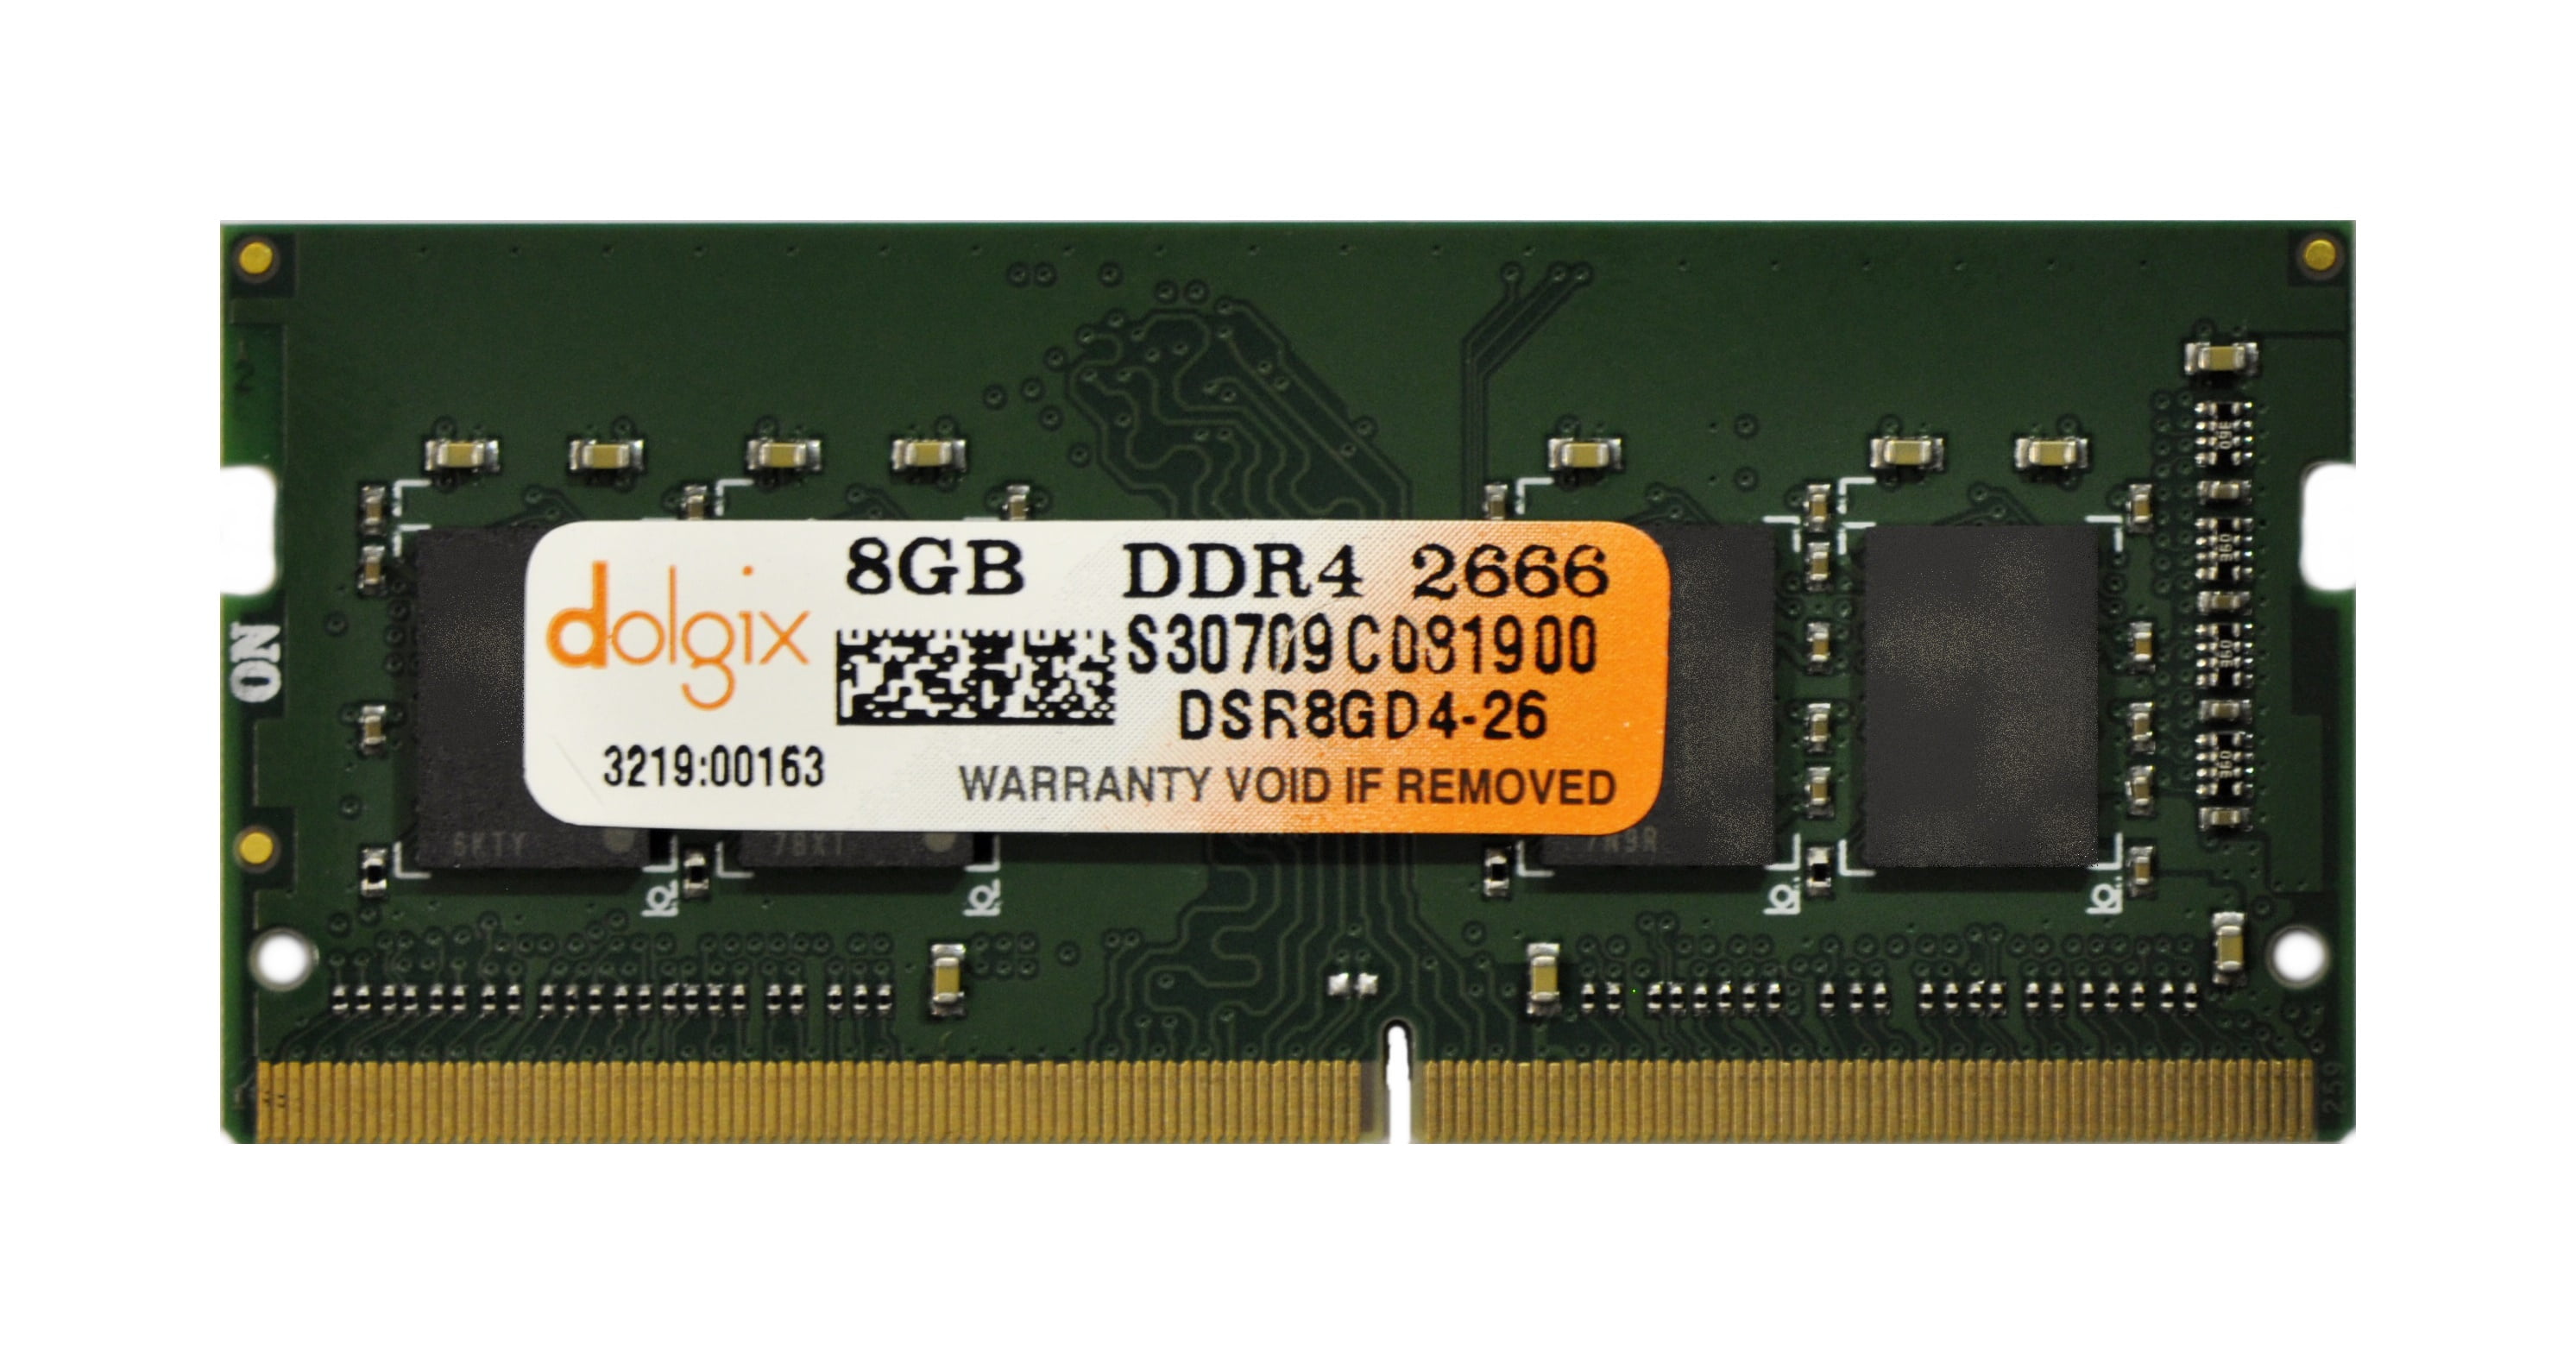 DDR3/DDR3L 1600MHz SODIMM PC3L-12800 Laptop Memory Upgrade Module 3470 A-Tech 4GB RAM for Dell Latitude 3570